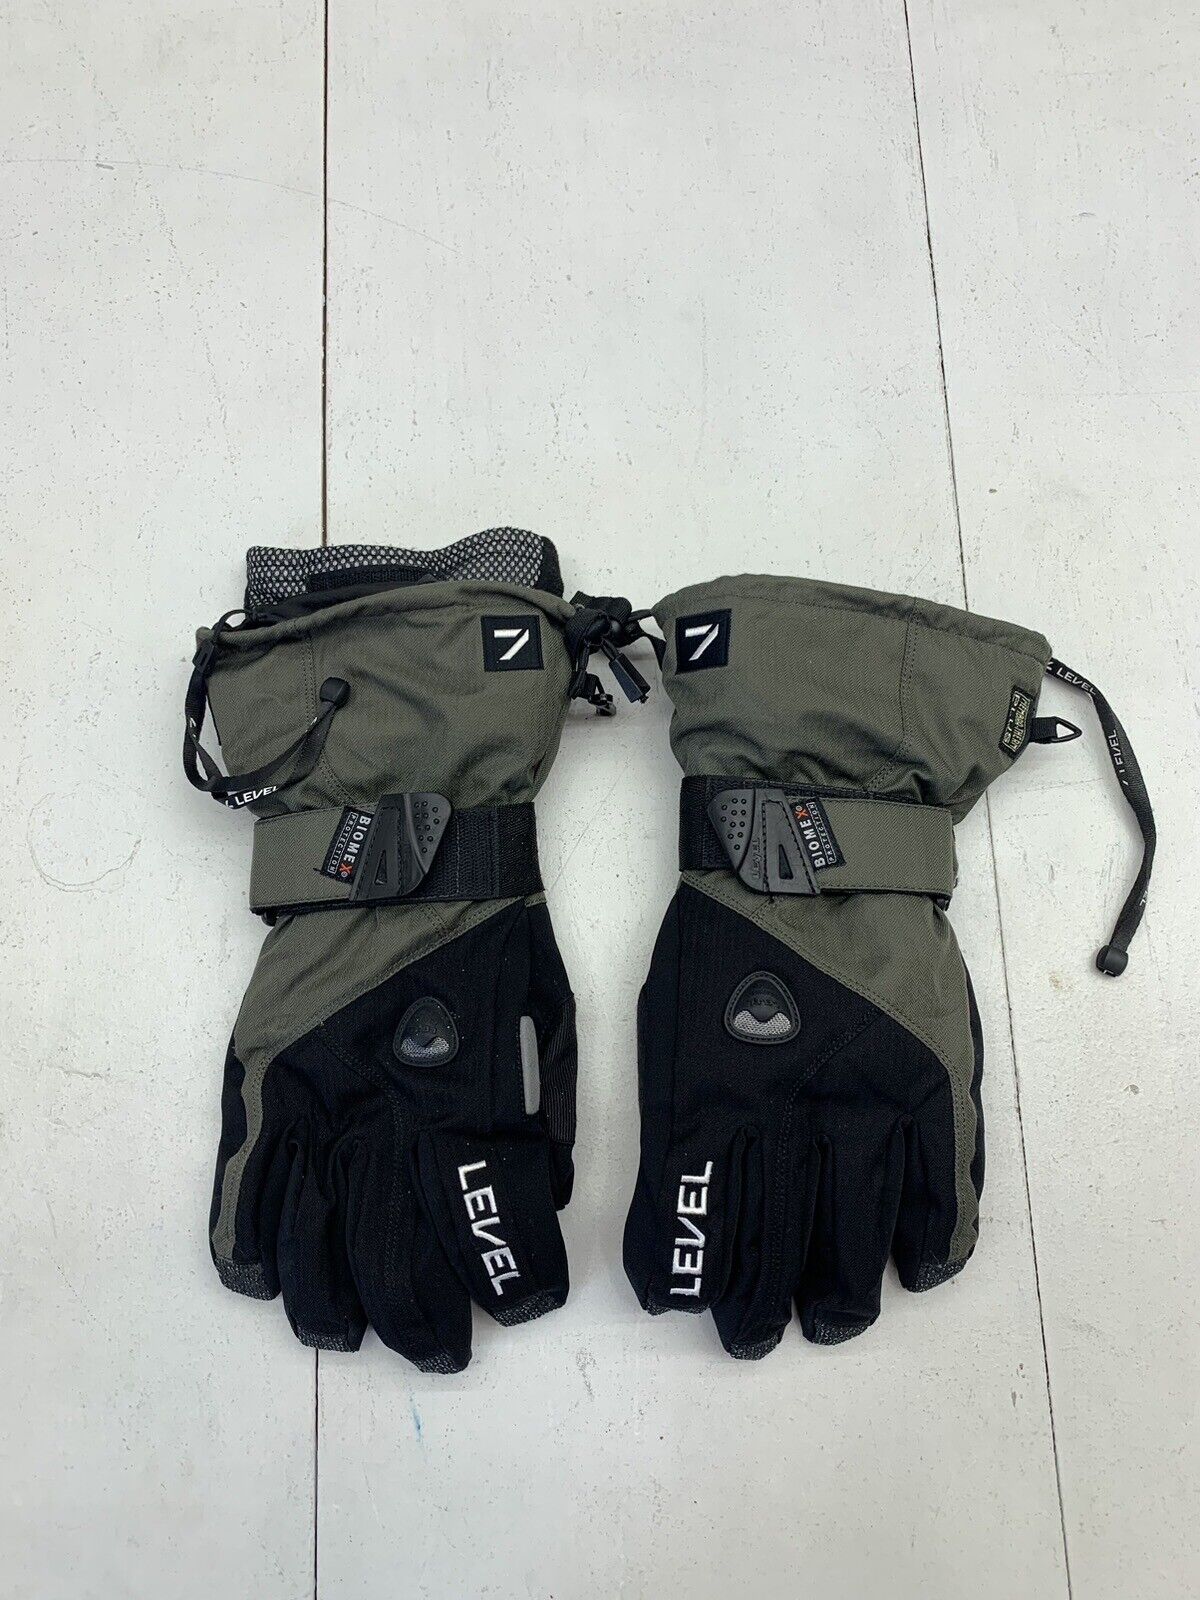 Level 7 Biomex Protection Mens Black Dark Green Ski Gloves Size Medium